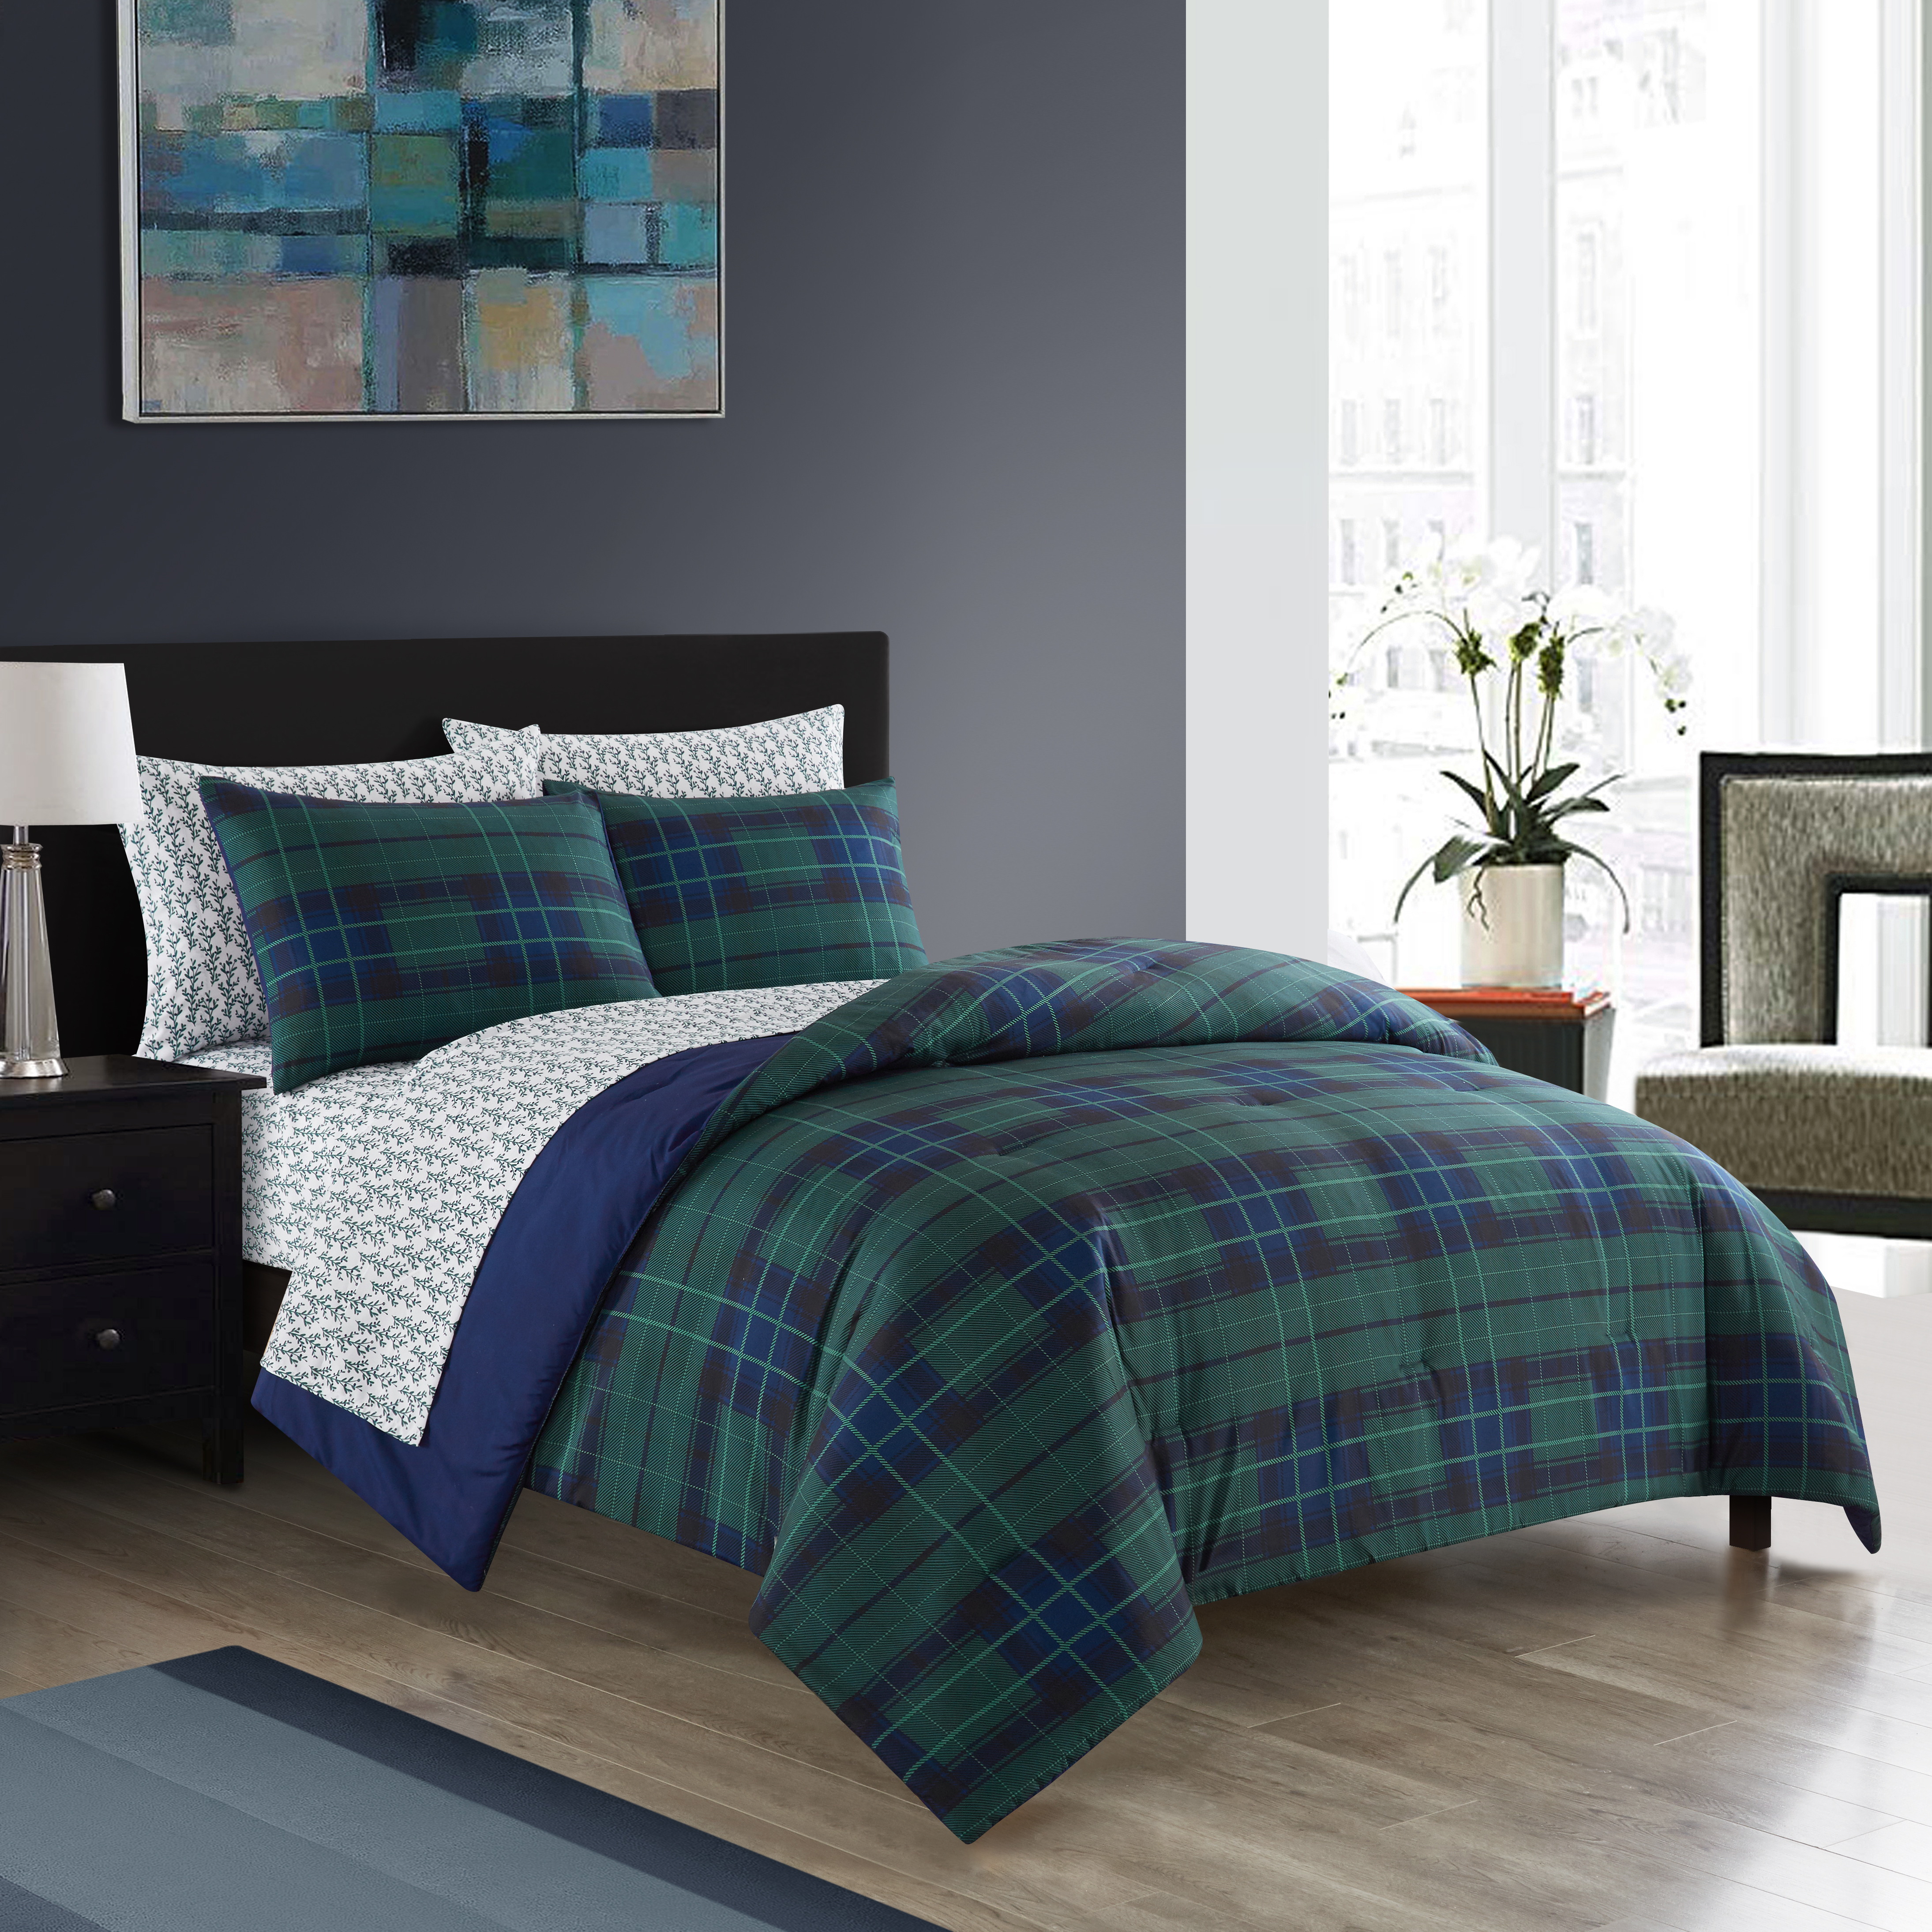 Dearfoams Super Soft 7-Piece Blue Tartan Plaid Bed in a Bag Bedding Set, King - image 1 of 4